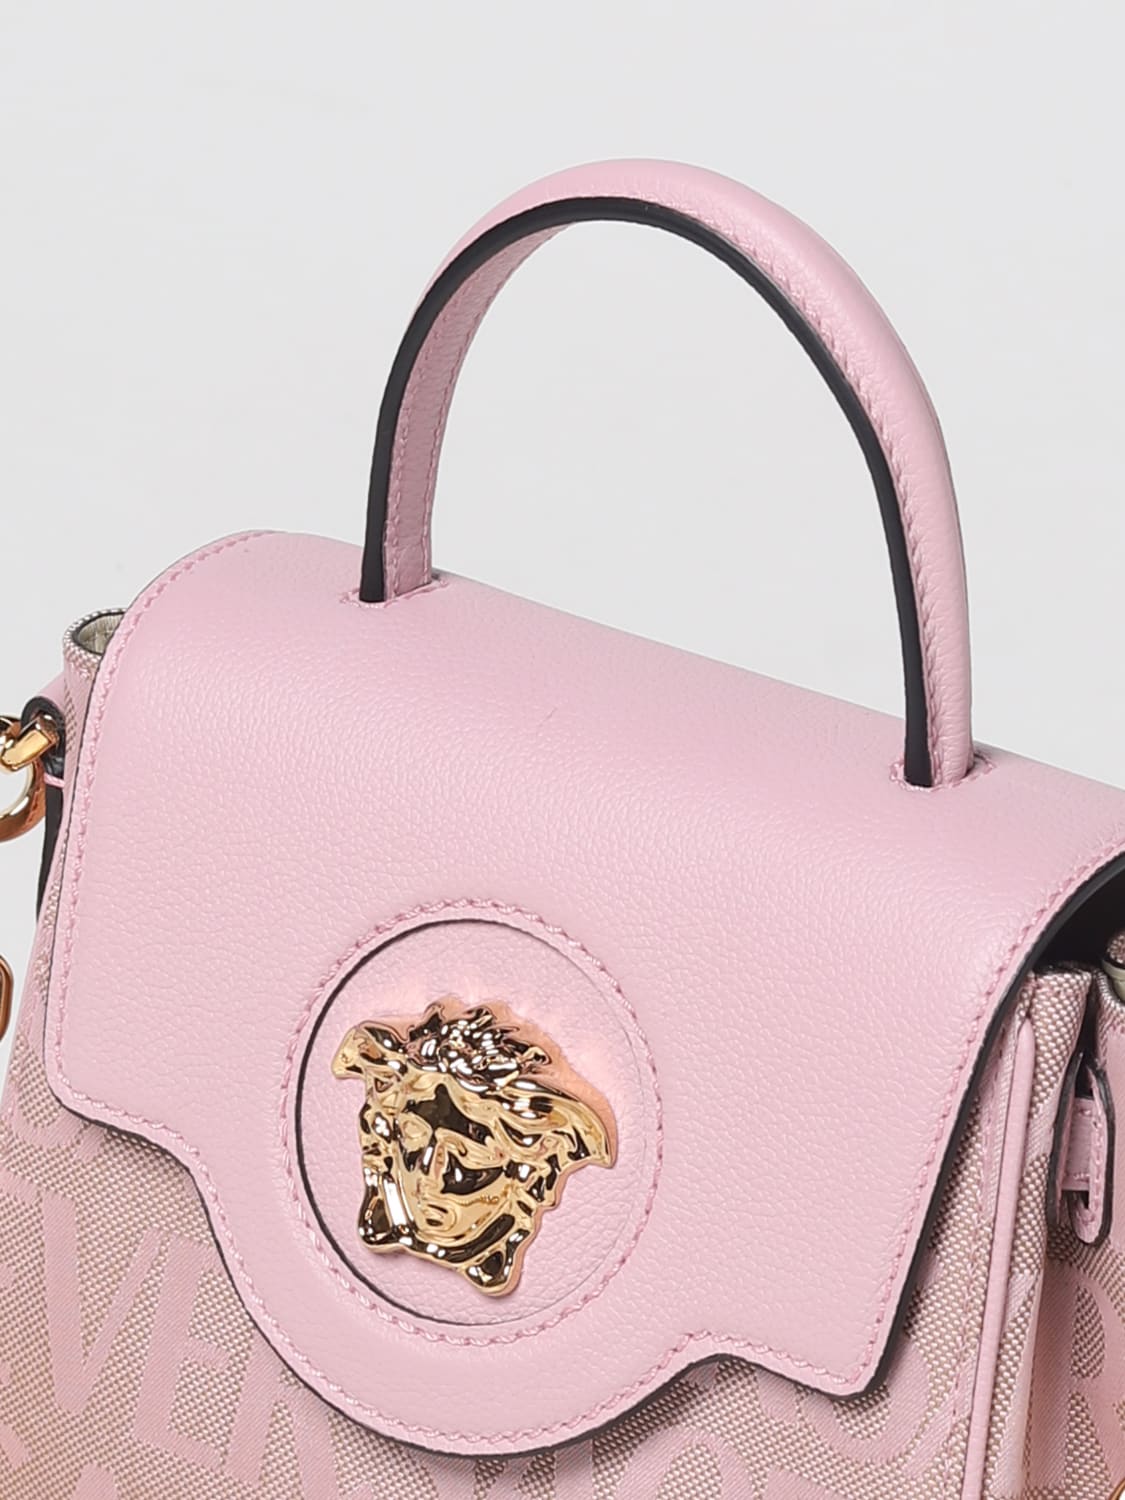 VERSACE: Medusa patent leather bag - Pink  Versace mini bag 10030161A04289  online at